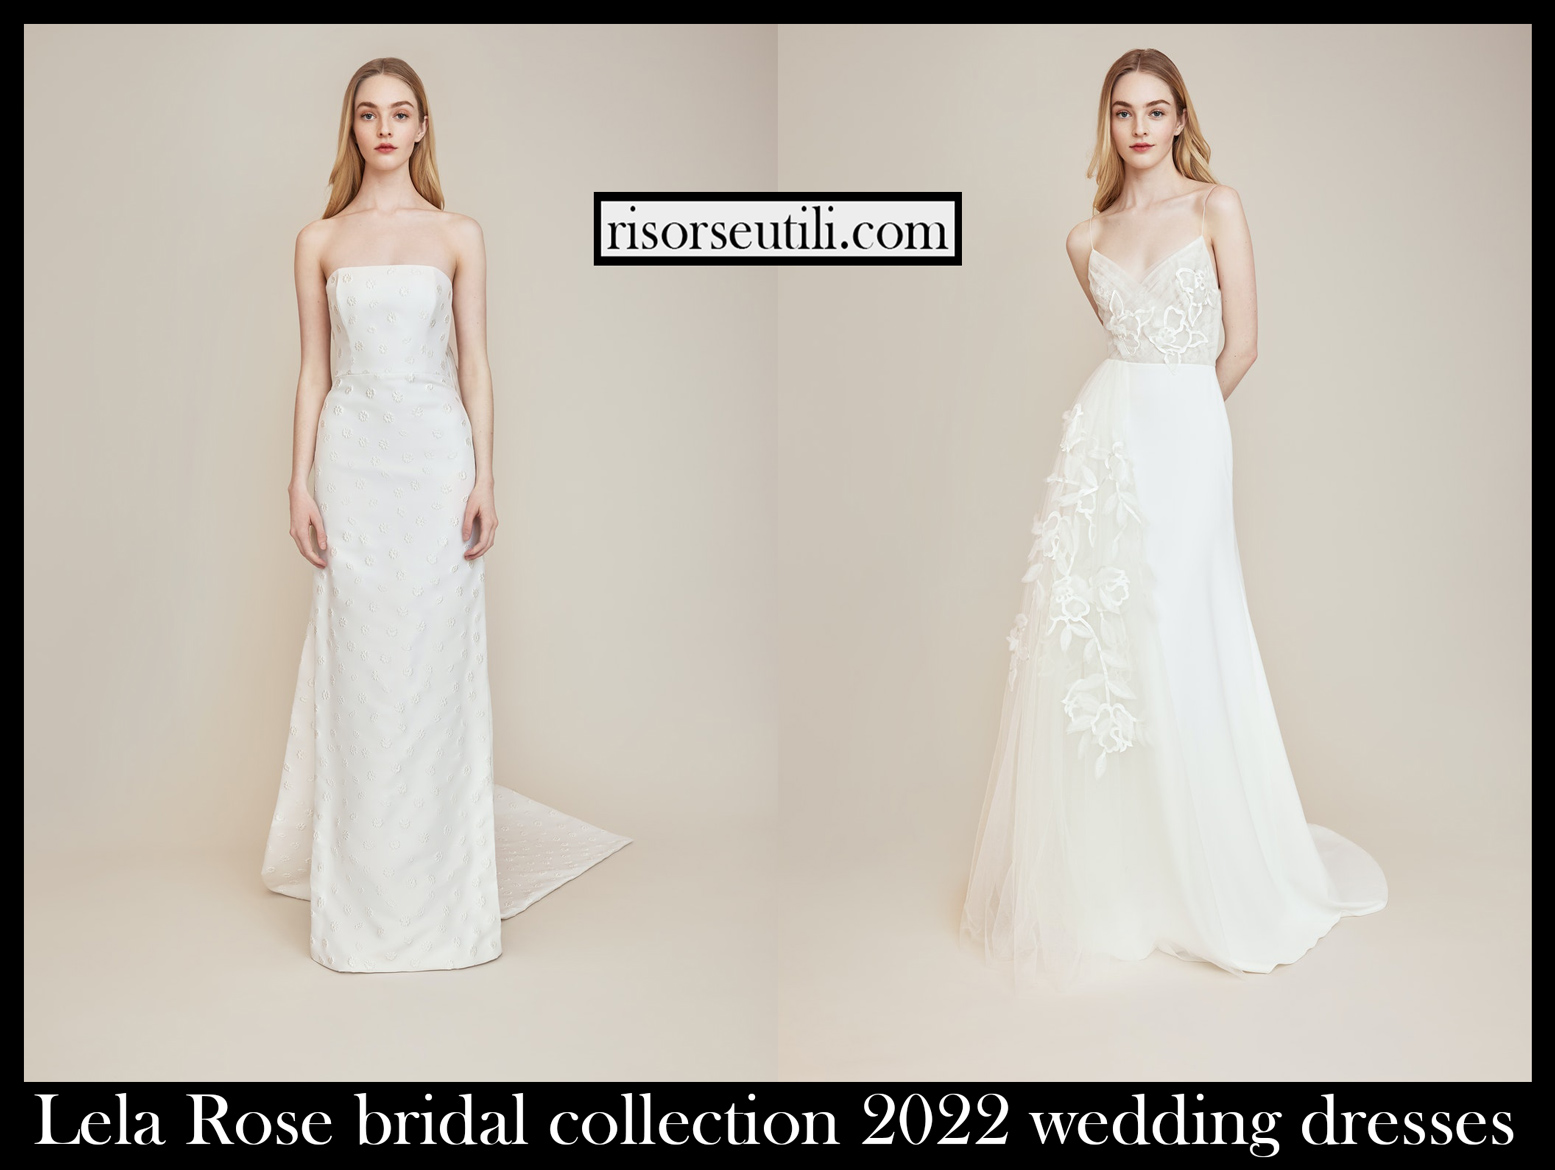 Lela Rose bridal collection 2022 wedding dresses